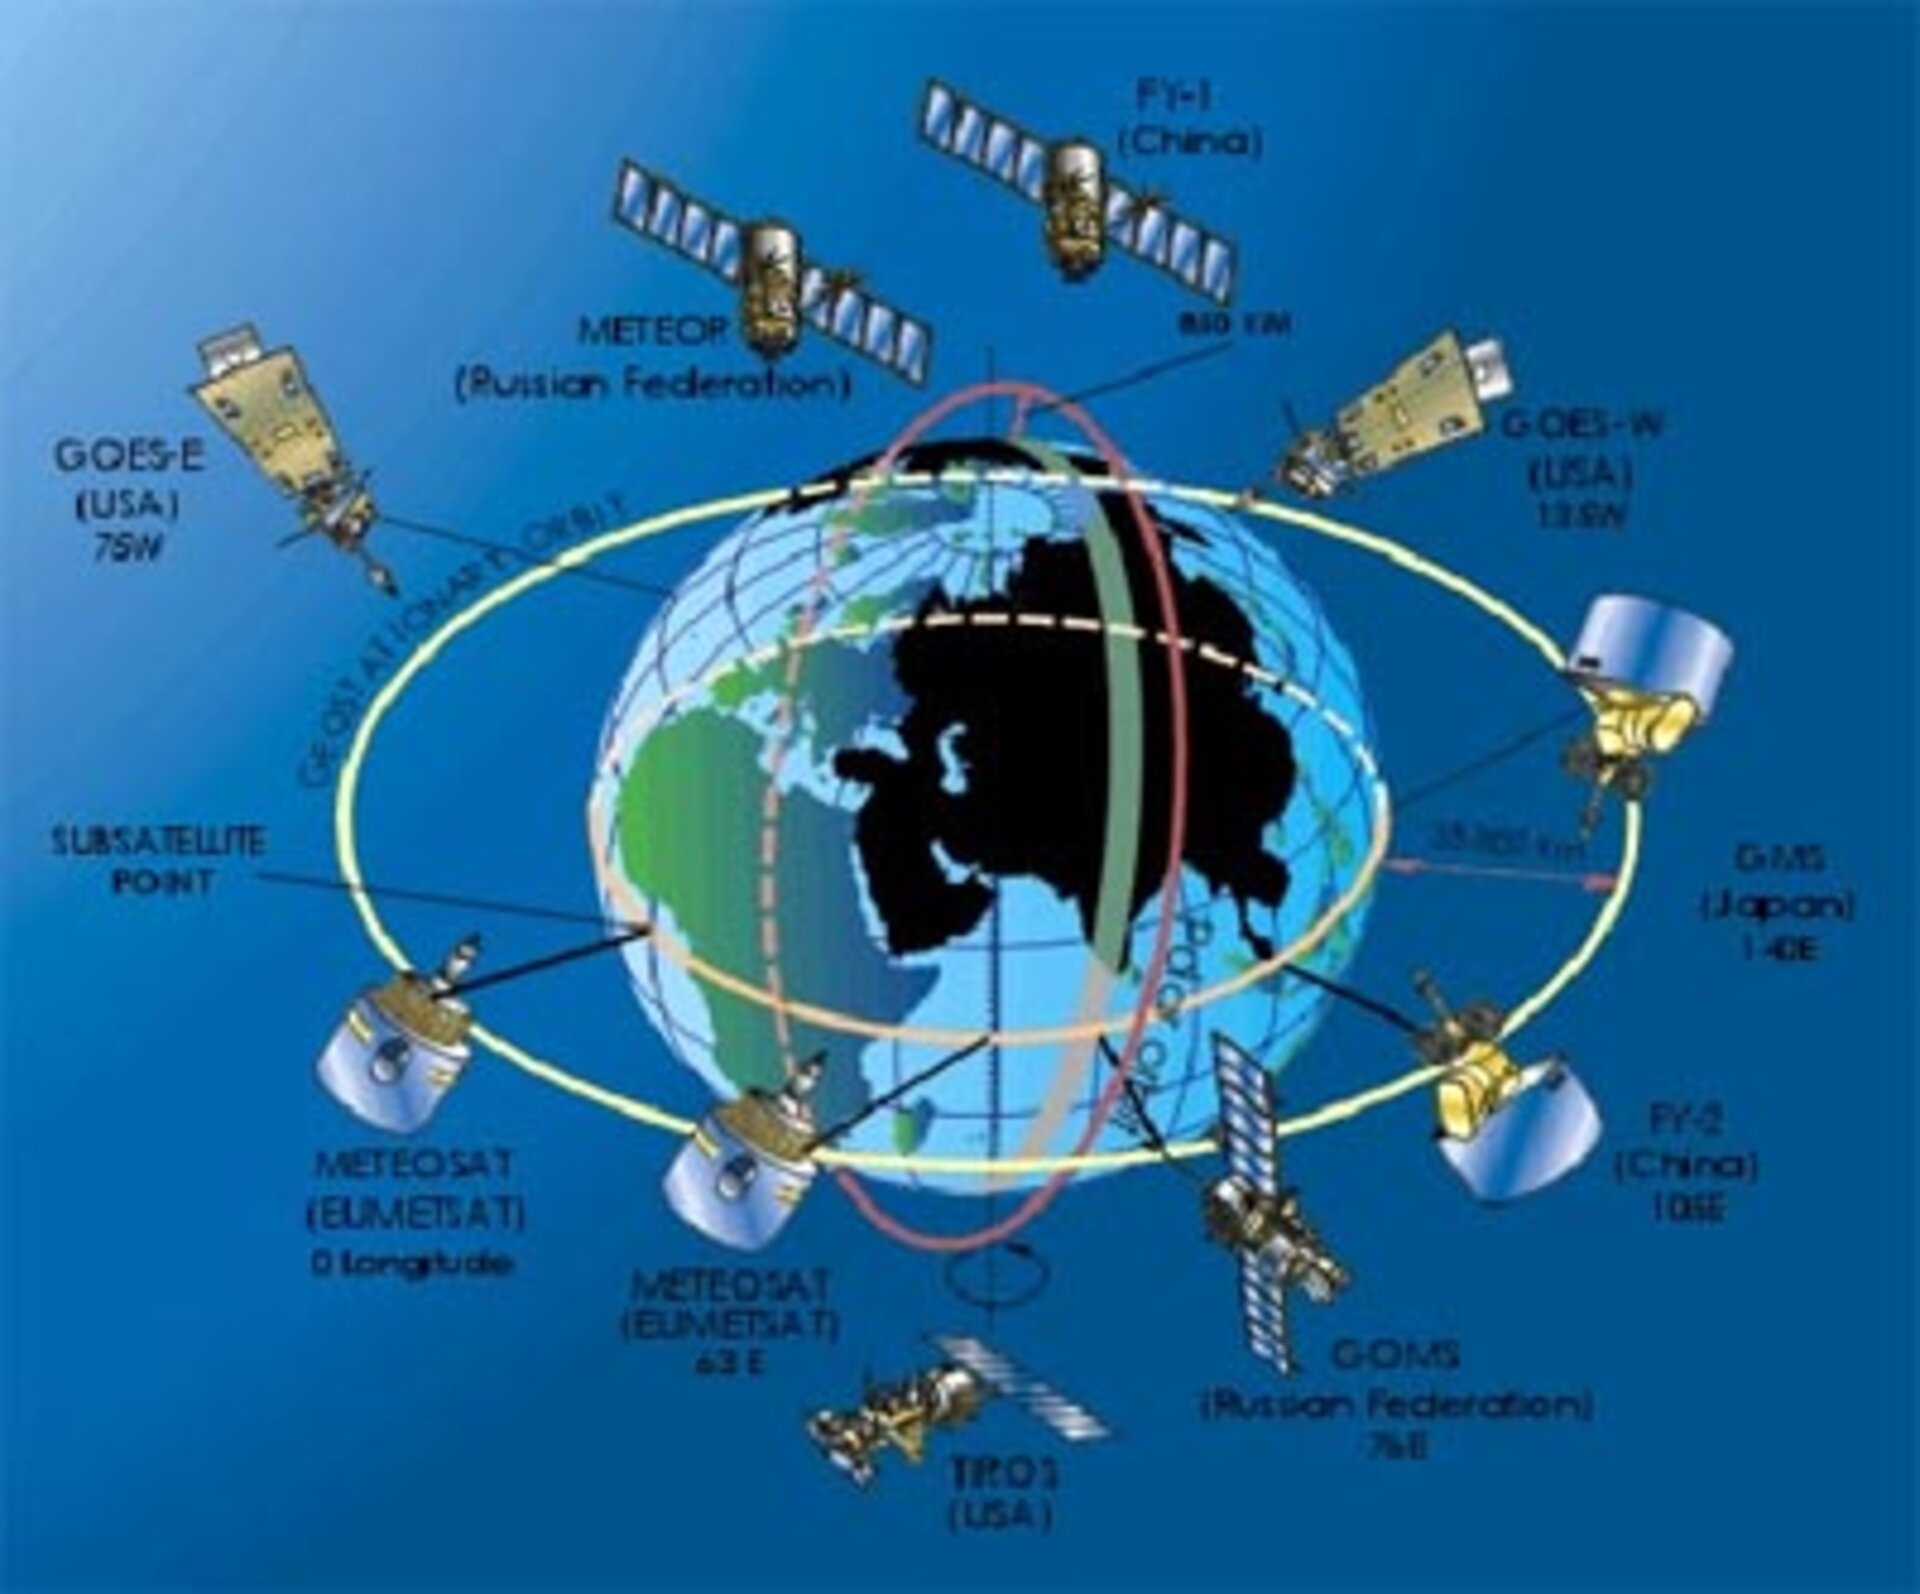 Meteorological satellites